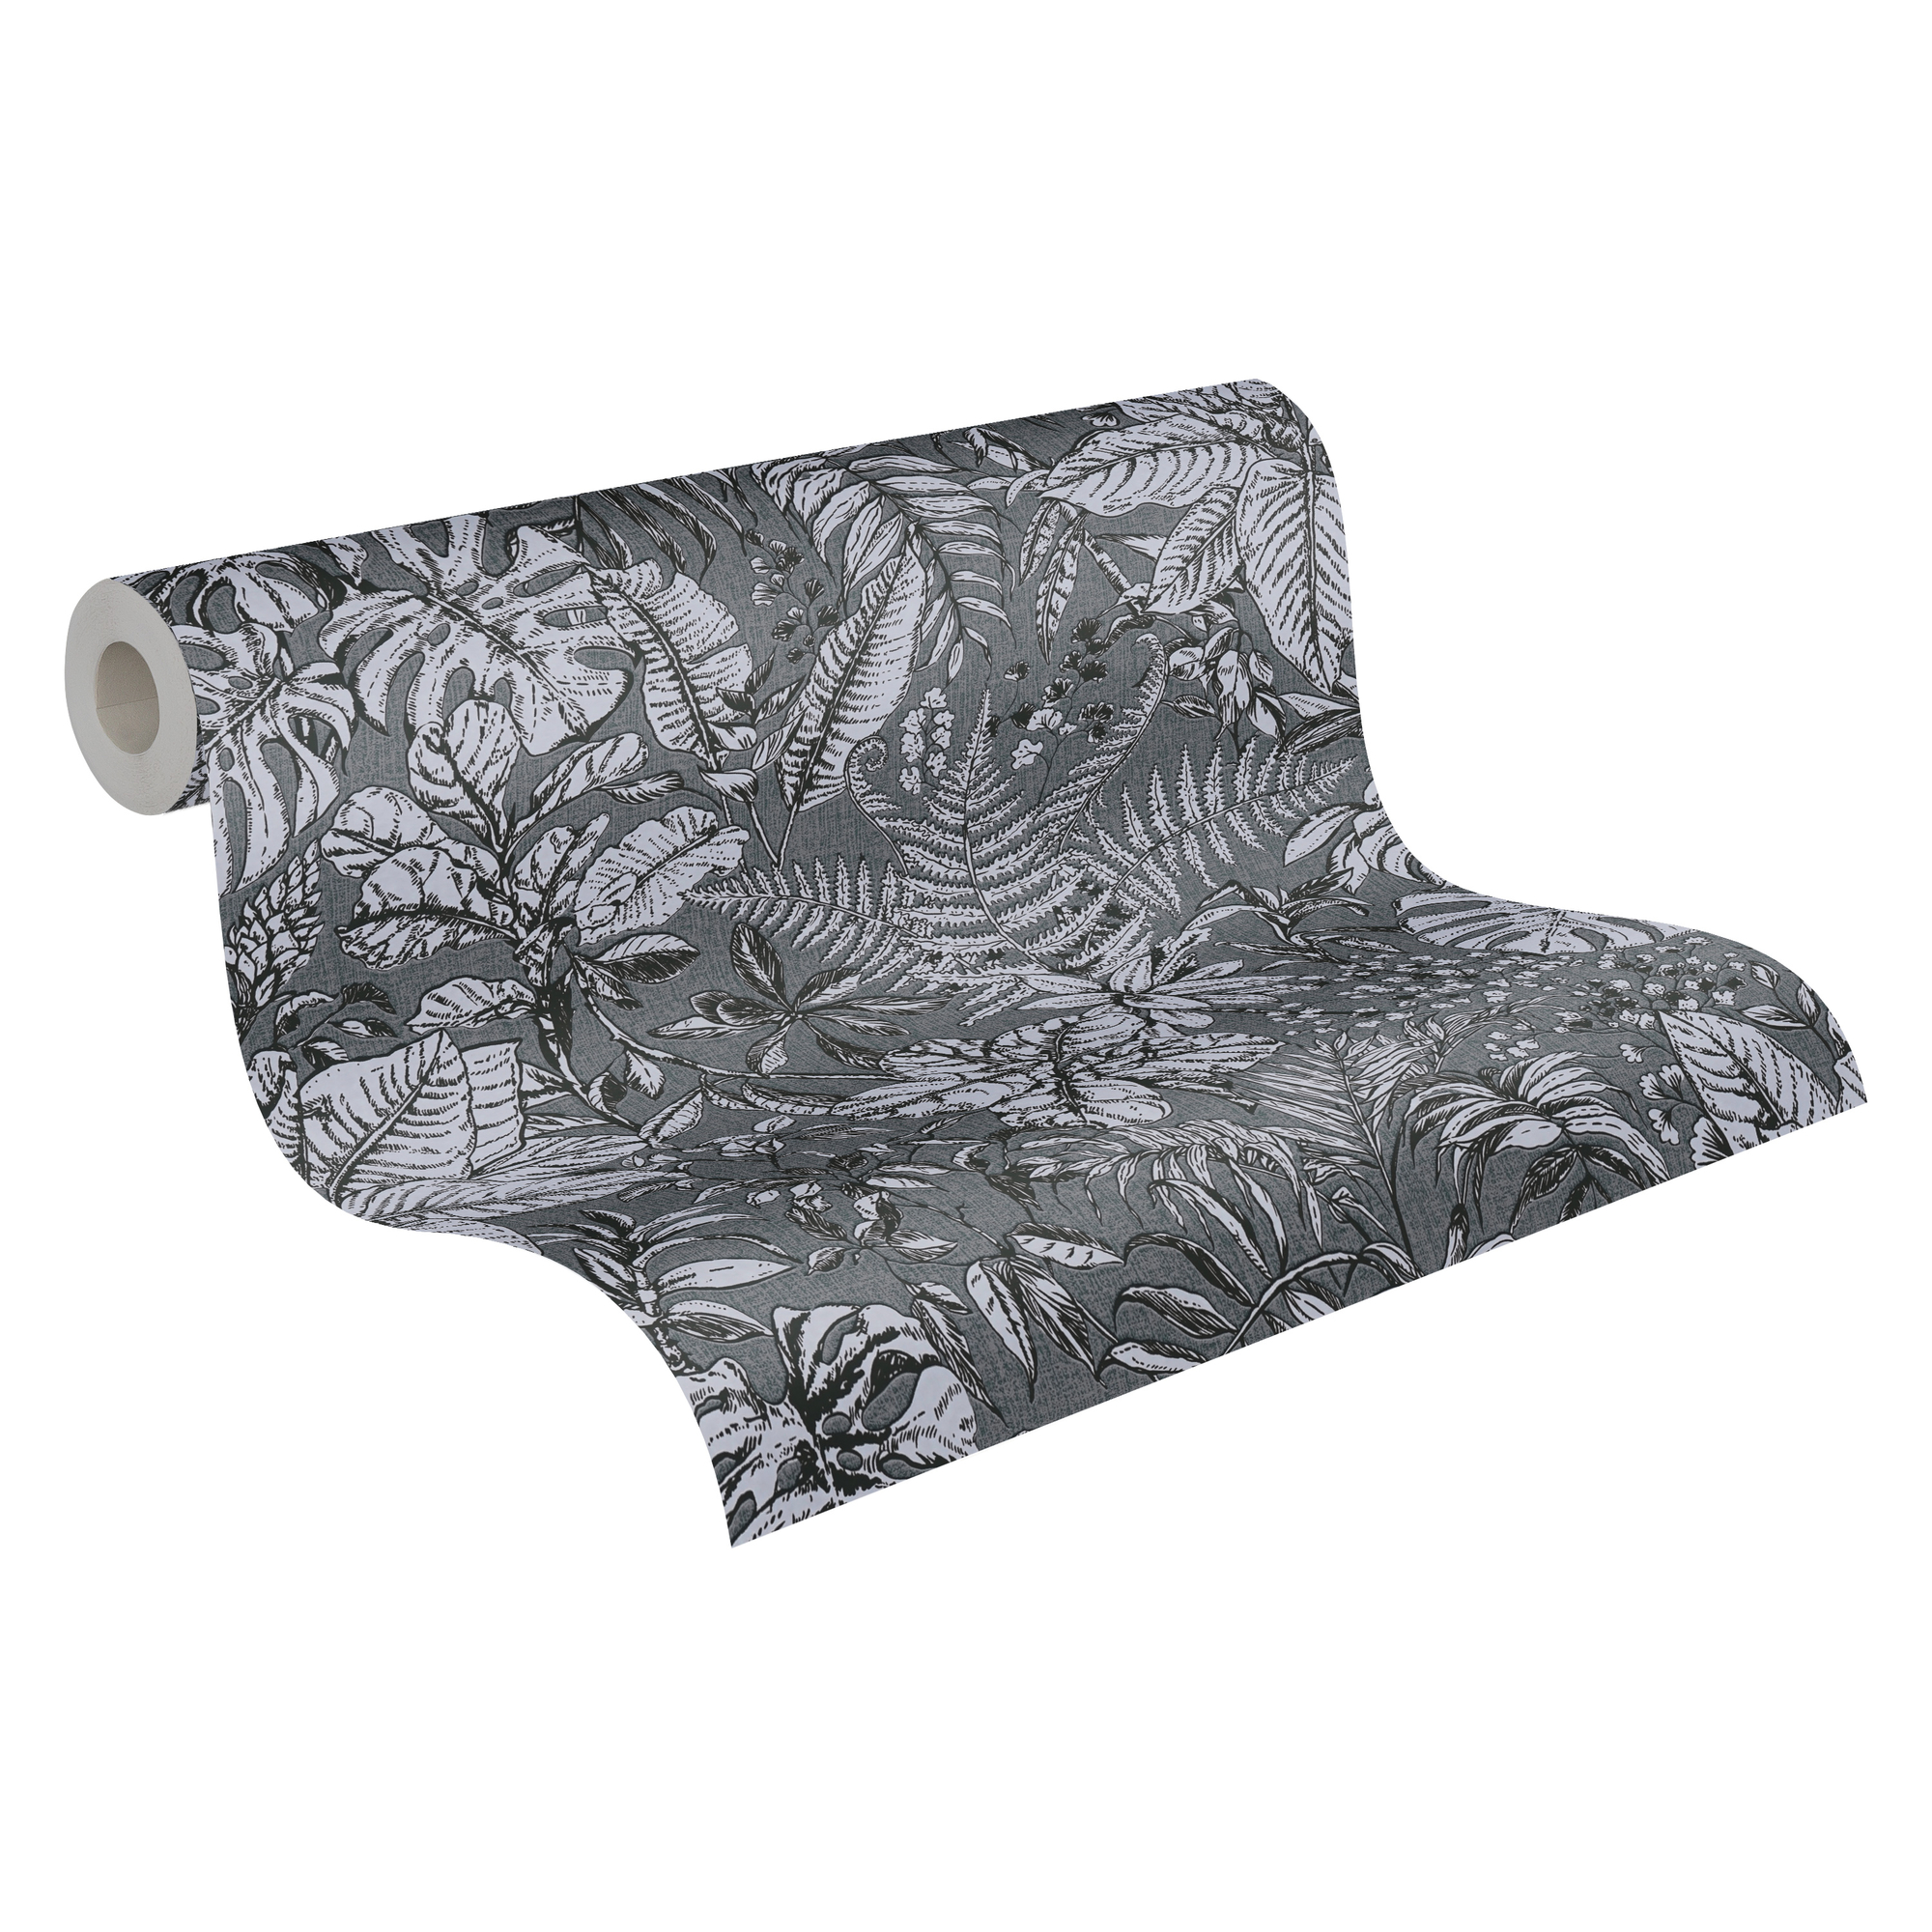 Vliestapete 'Daniel Hechter 6' Dschungel grau/weiß 53 x 1005 cm + product picture